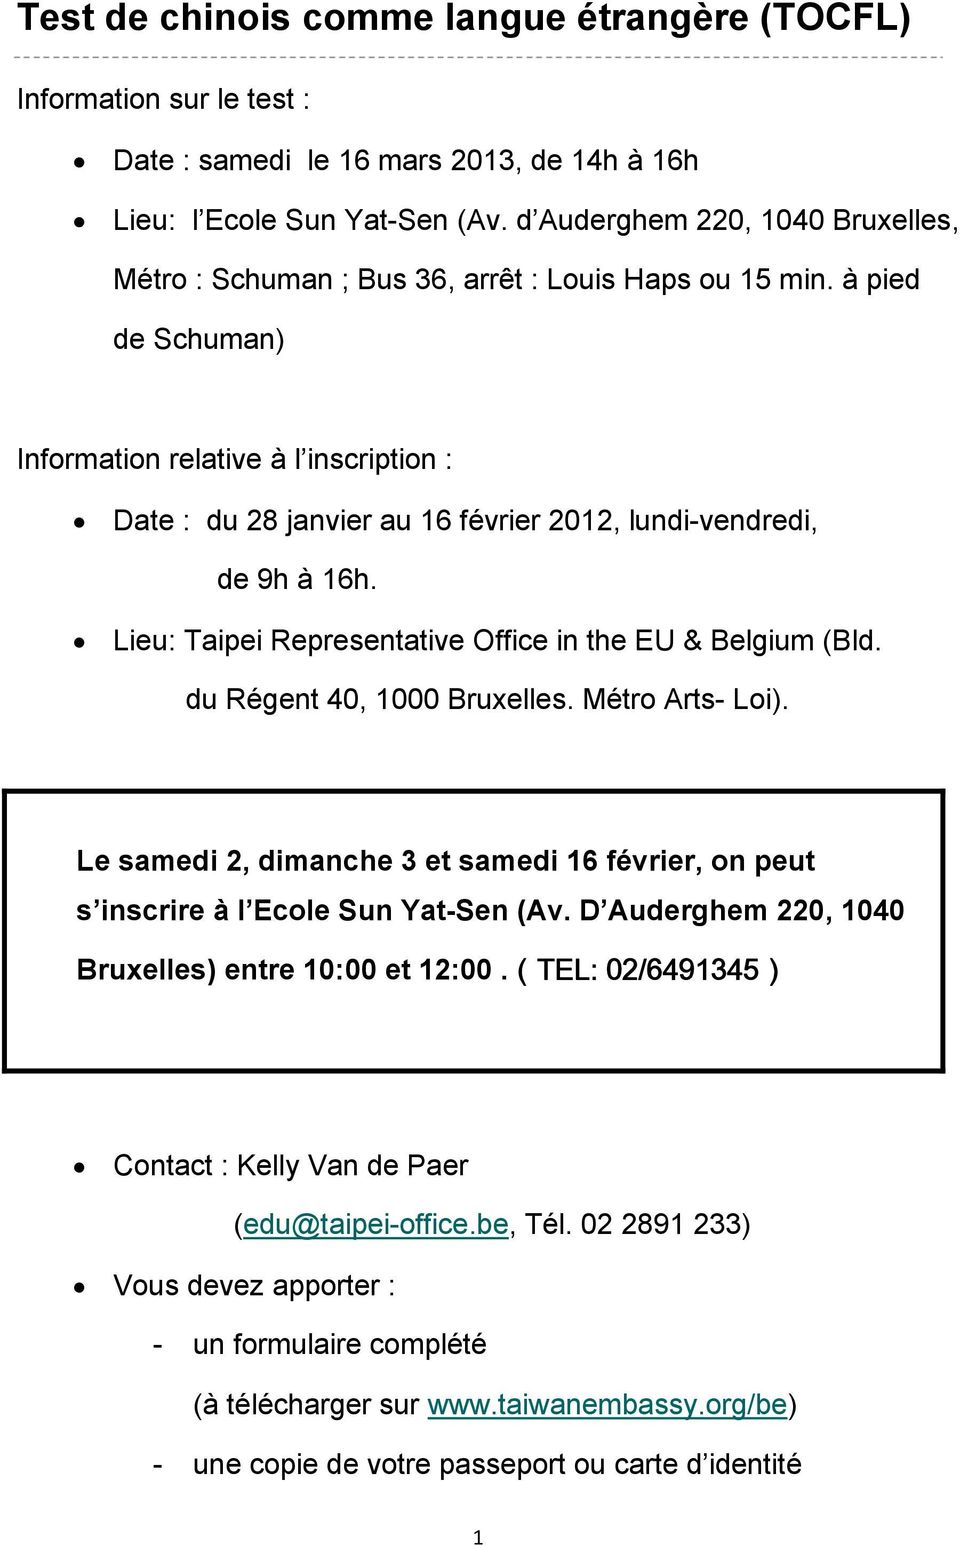 à pied de Schuman) Information relative à l inscription : Date : du 28 janvier au 16 février 2012, lundi-vendredi, de 9h à 16h. Lieu: Taipei Representative Office in the EU & Belgium (Bld.